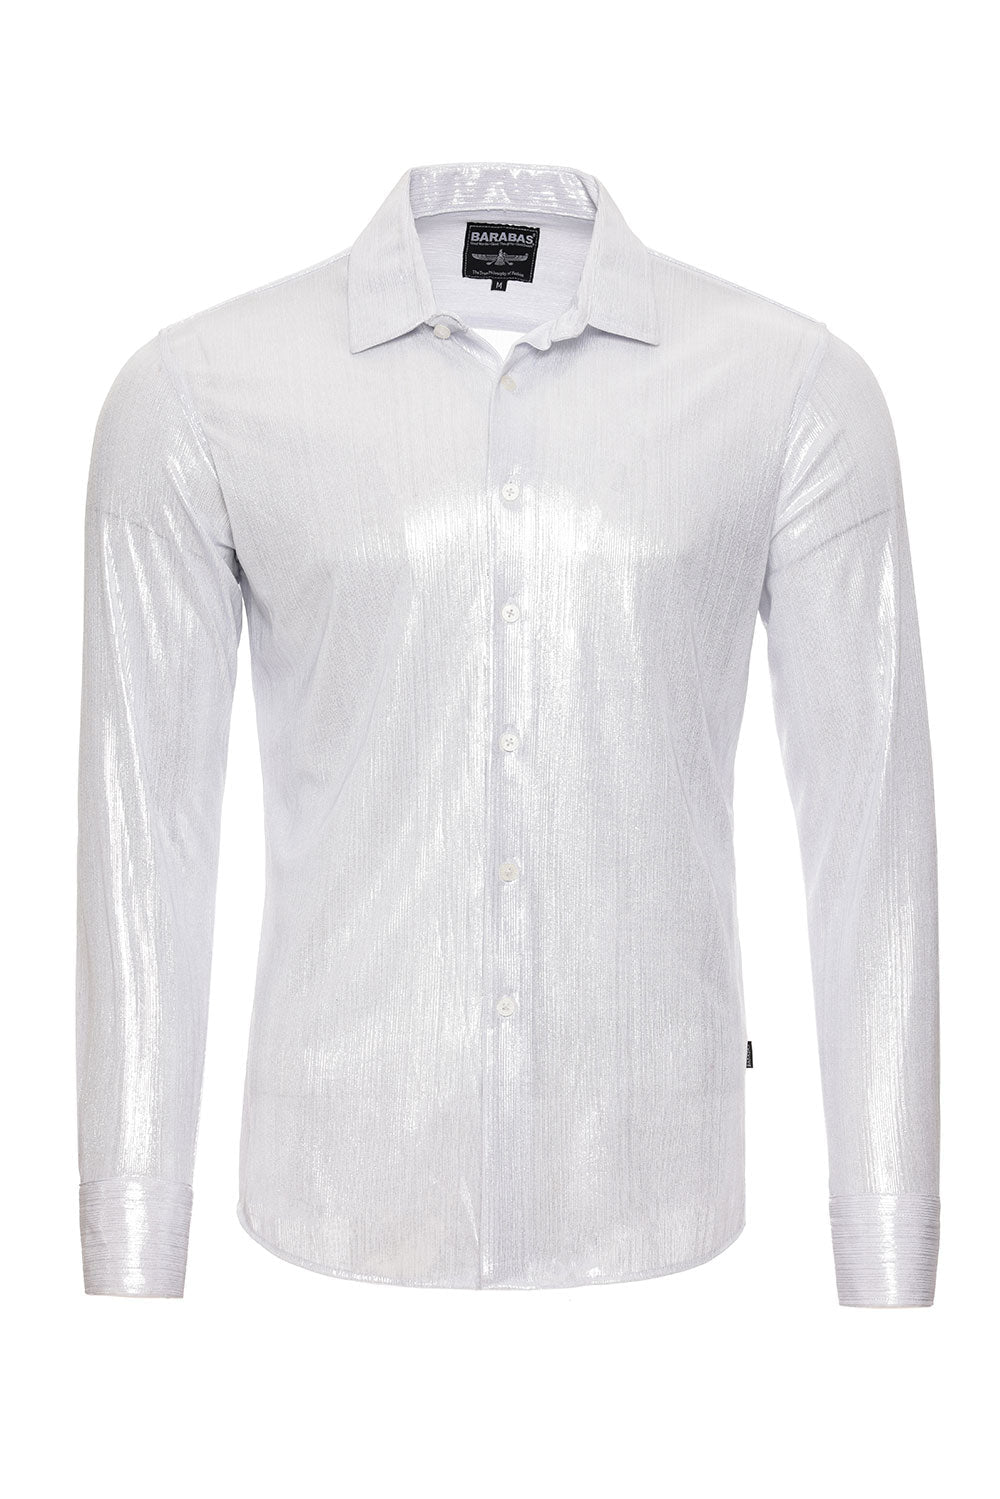 BARABAS Men's Premium Shinny Solid Color Button Down Dress Shirts B46 White